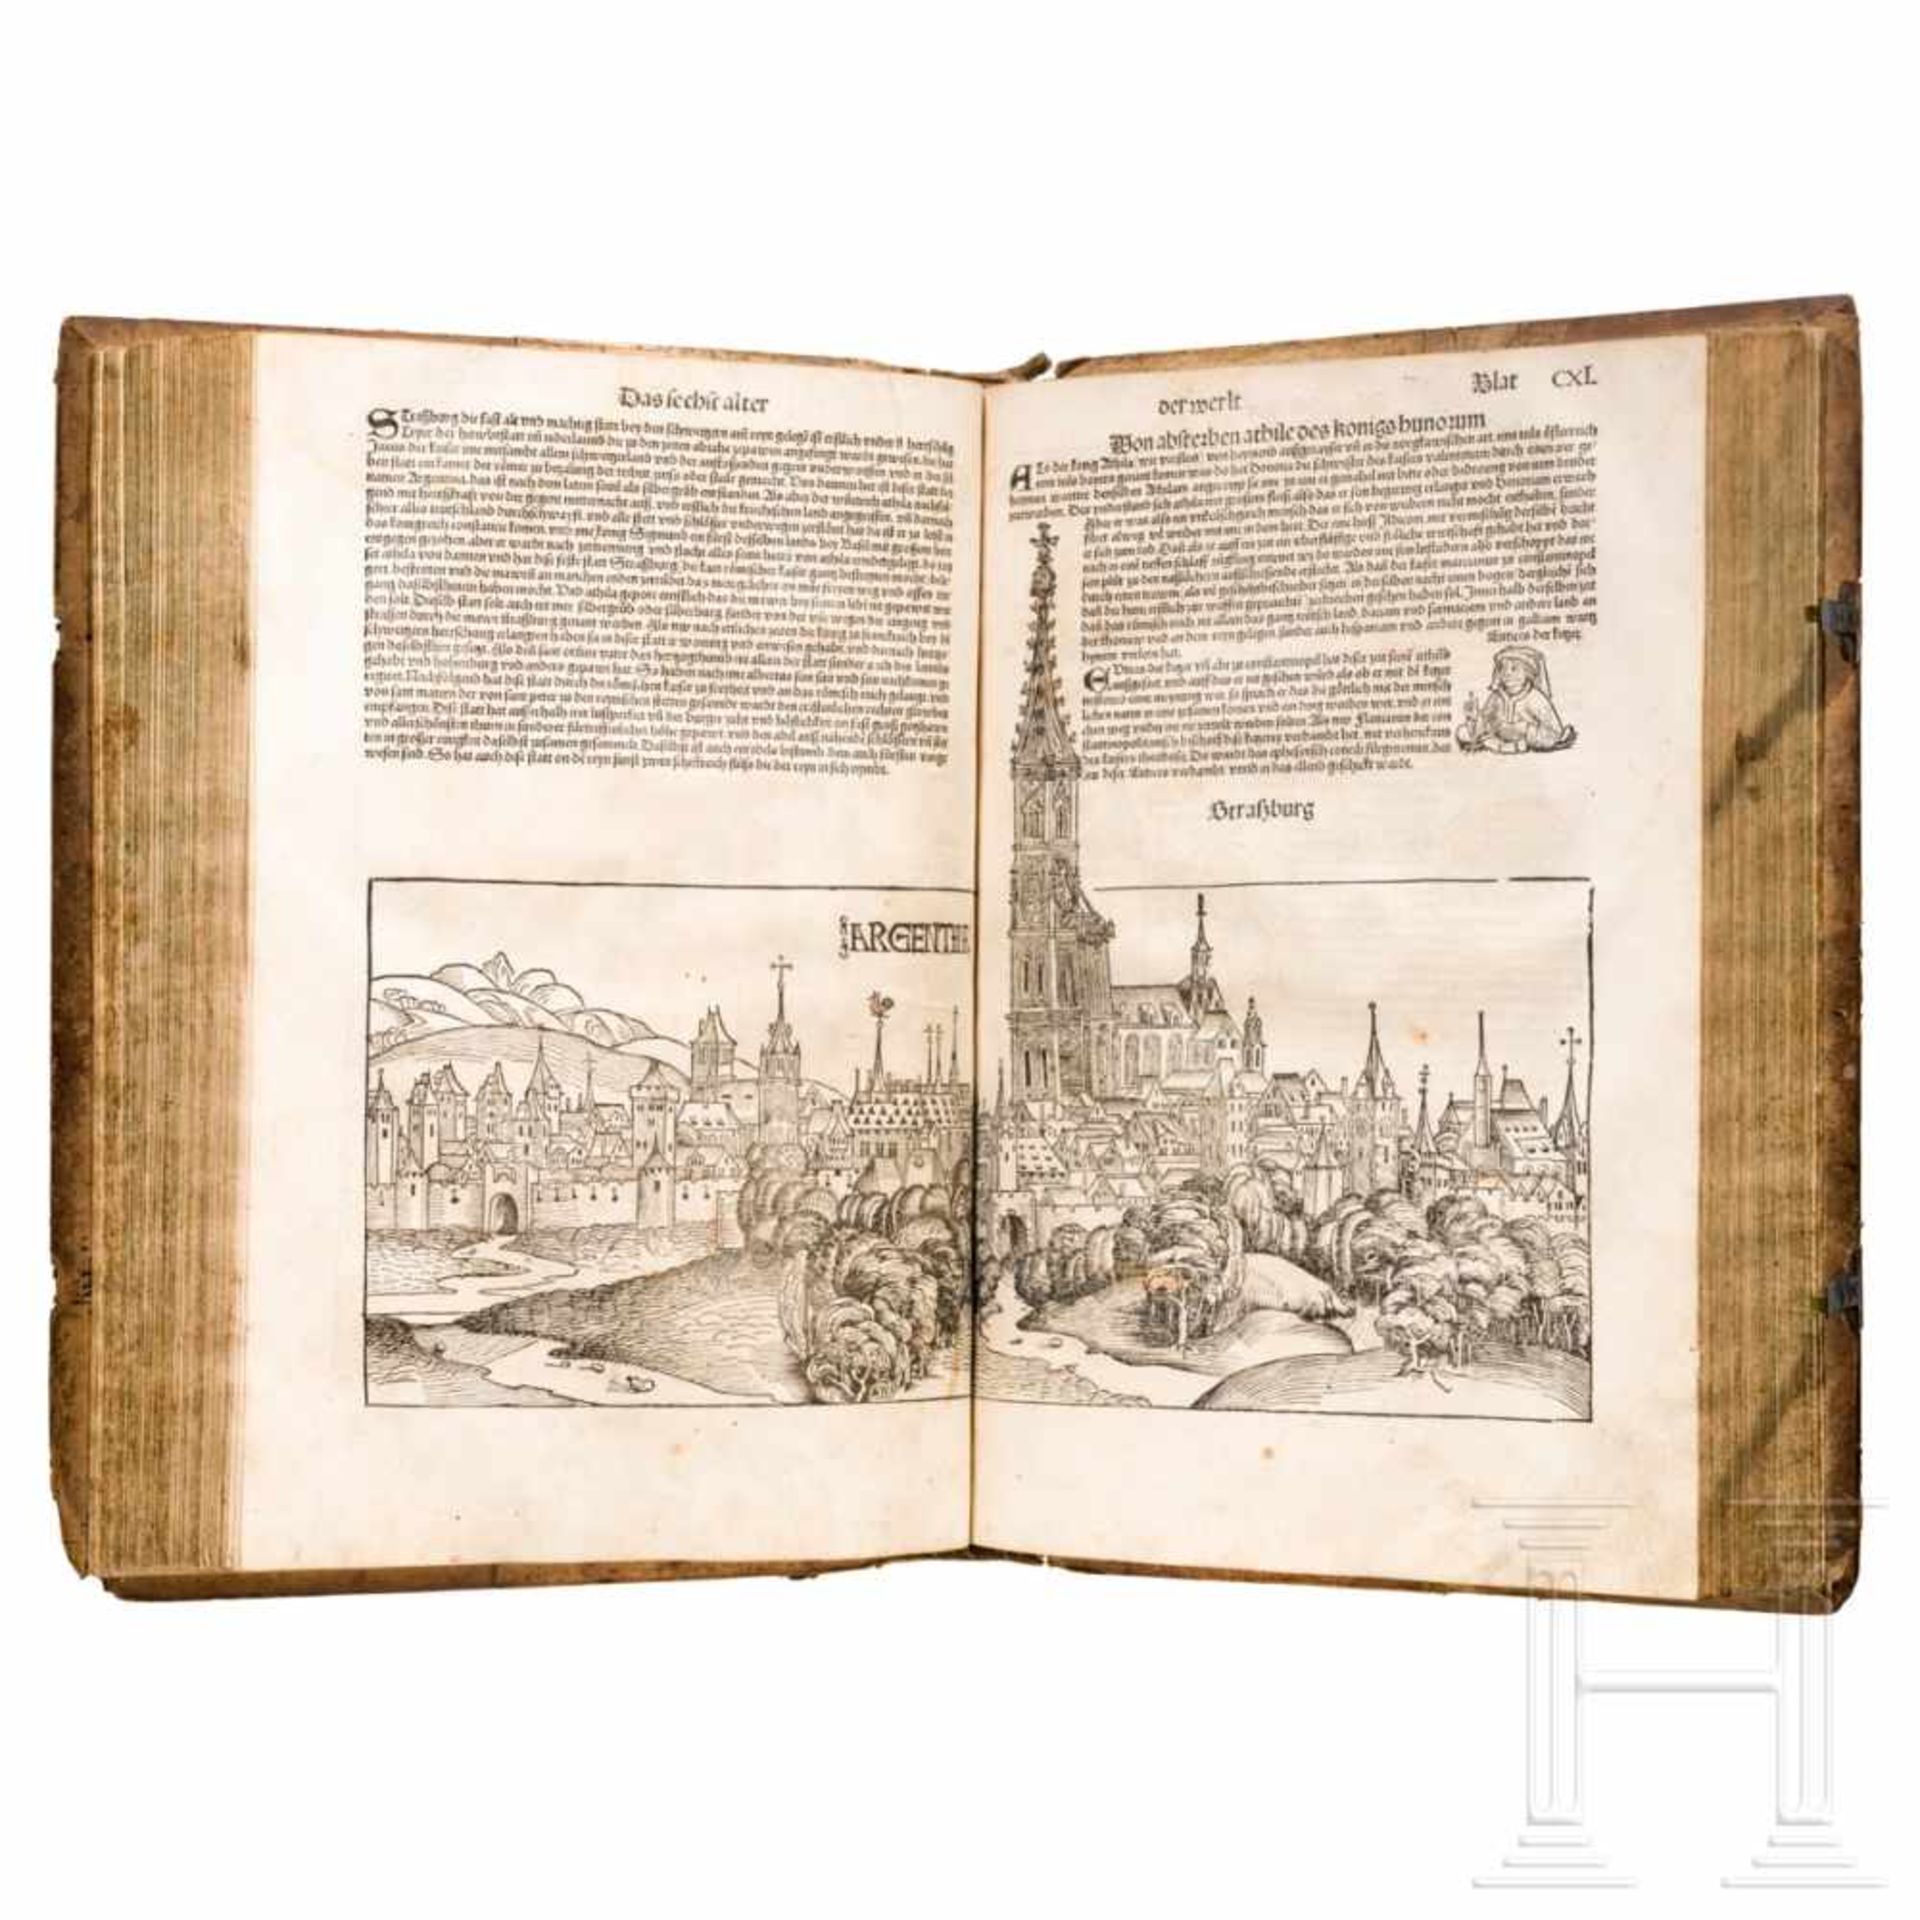 Hartmann Schedel, Das Buch der Chroniken, Nürnberg, A. Koberger, 1493 - Bild 23 aus 51